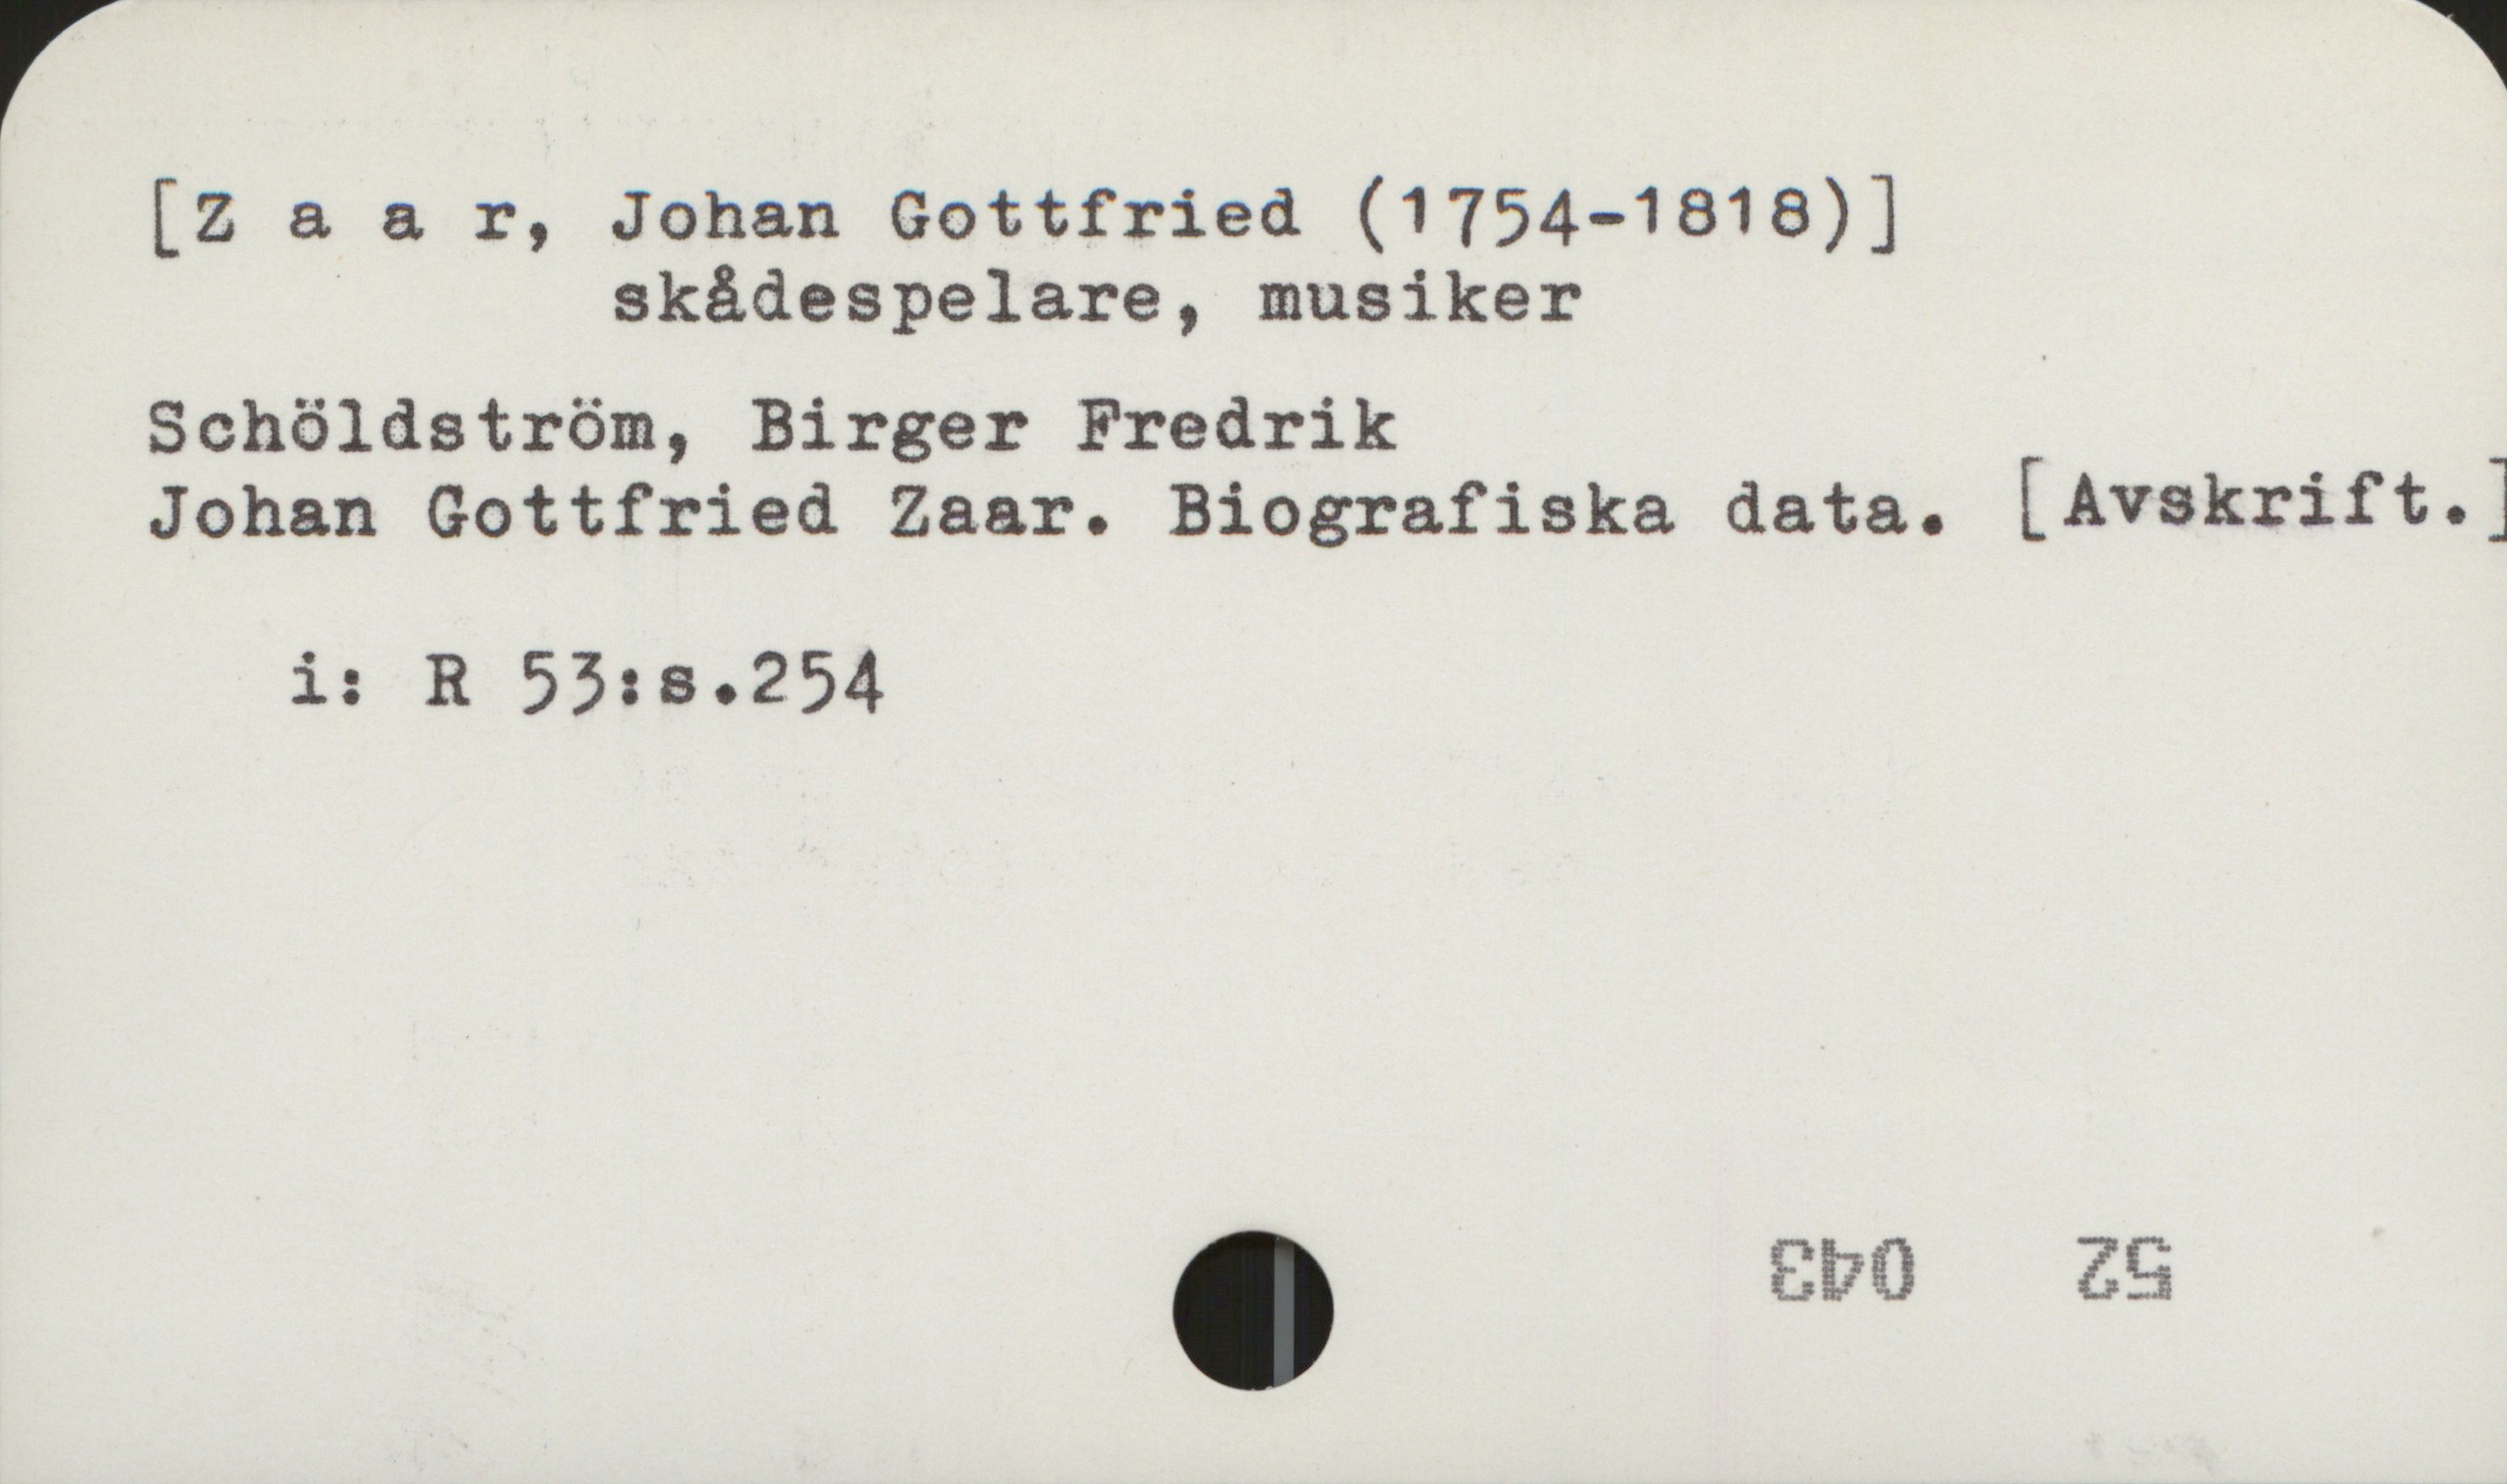 Zaar, Johan Gottfried [Zaar, Johan Gottfried (1754-1818)]
skådespelare, musiker

Schöldström, Birger Fredrik 
Johan Gottfried Zaar. Biografiska data. [Avskrift.]

i: R 53:s.254